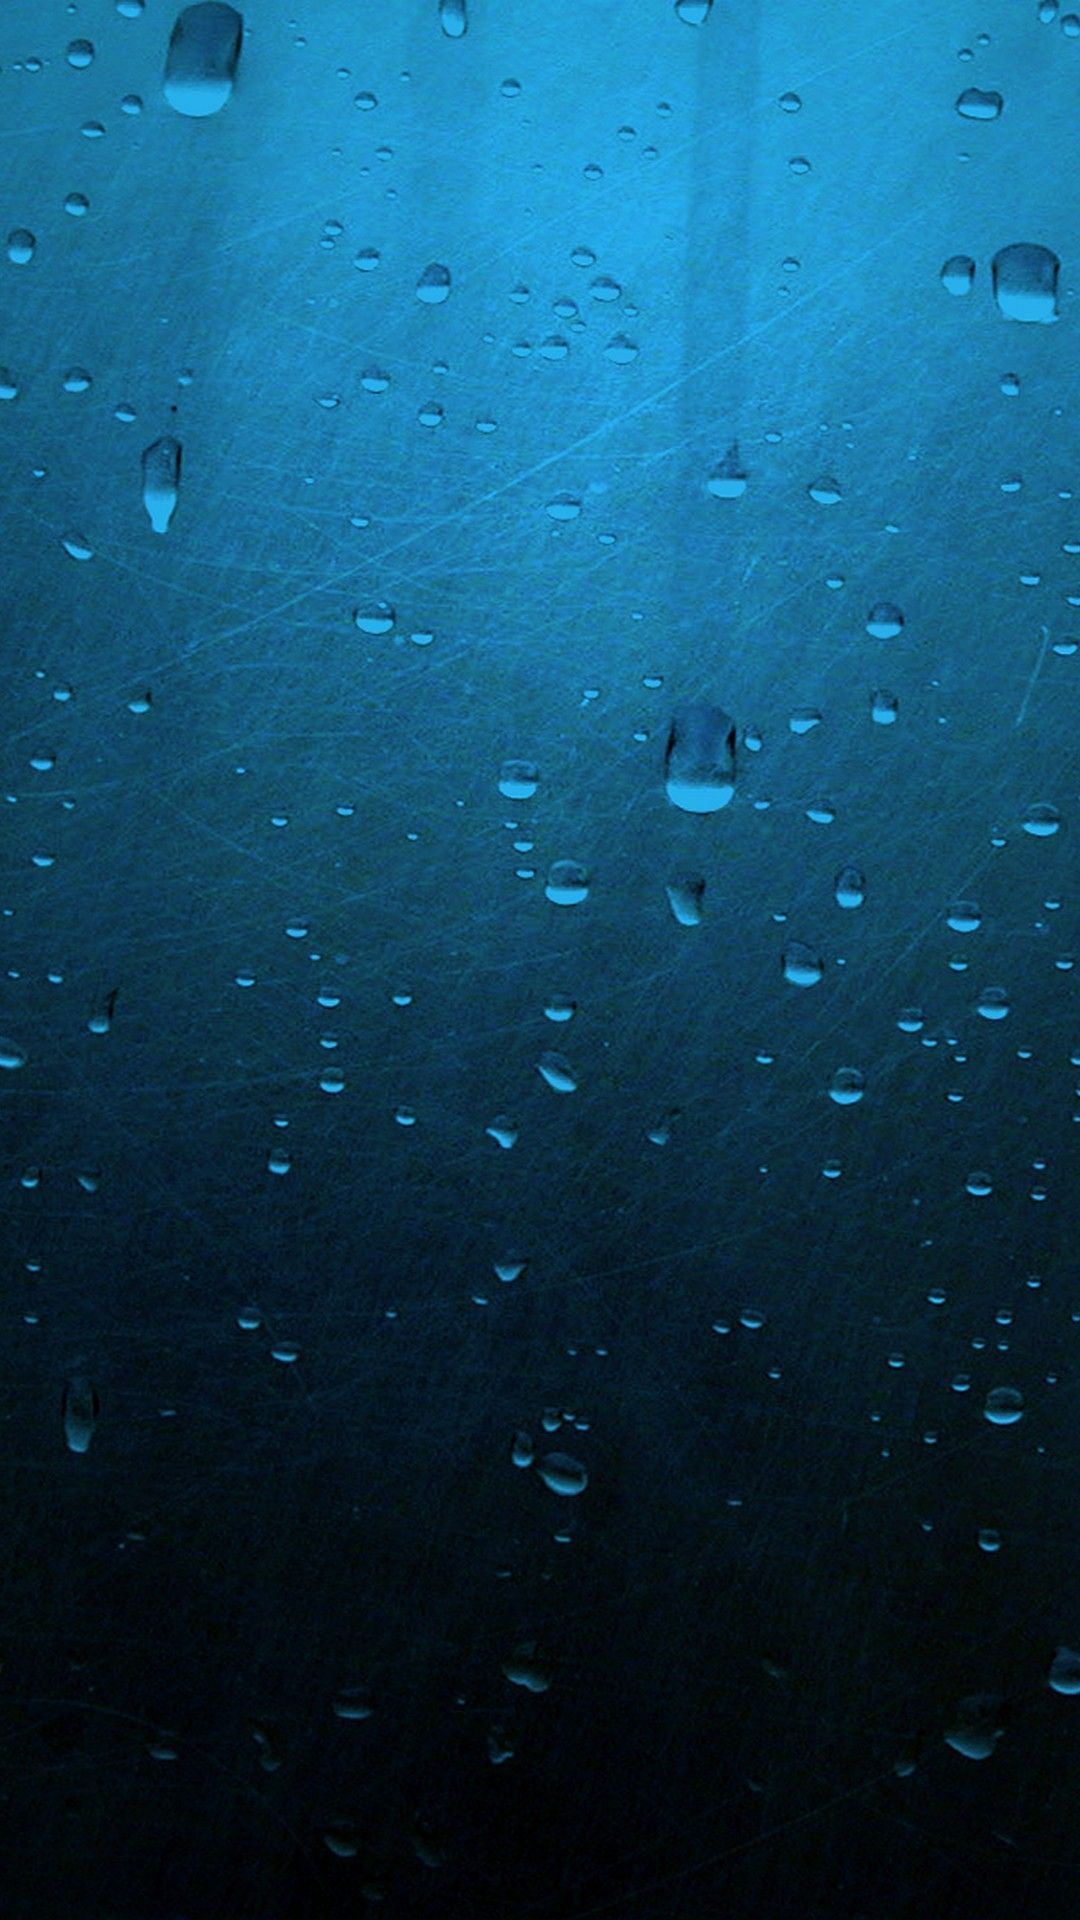 Rainfall Screensaver Wallpapers